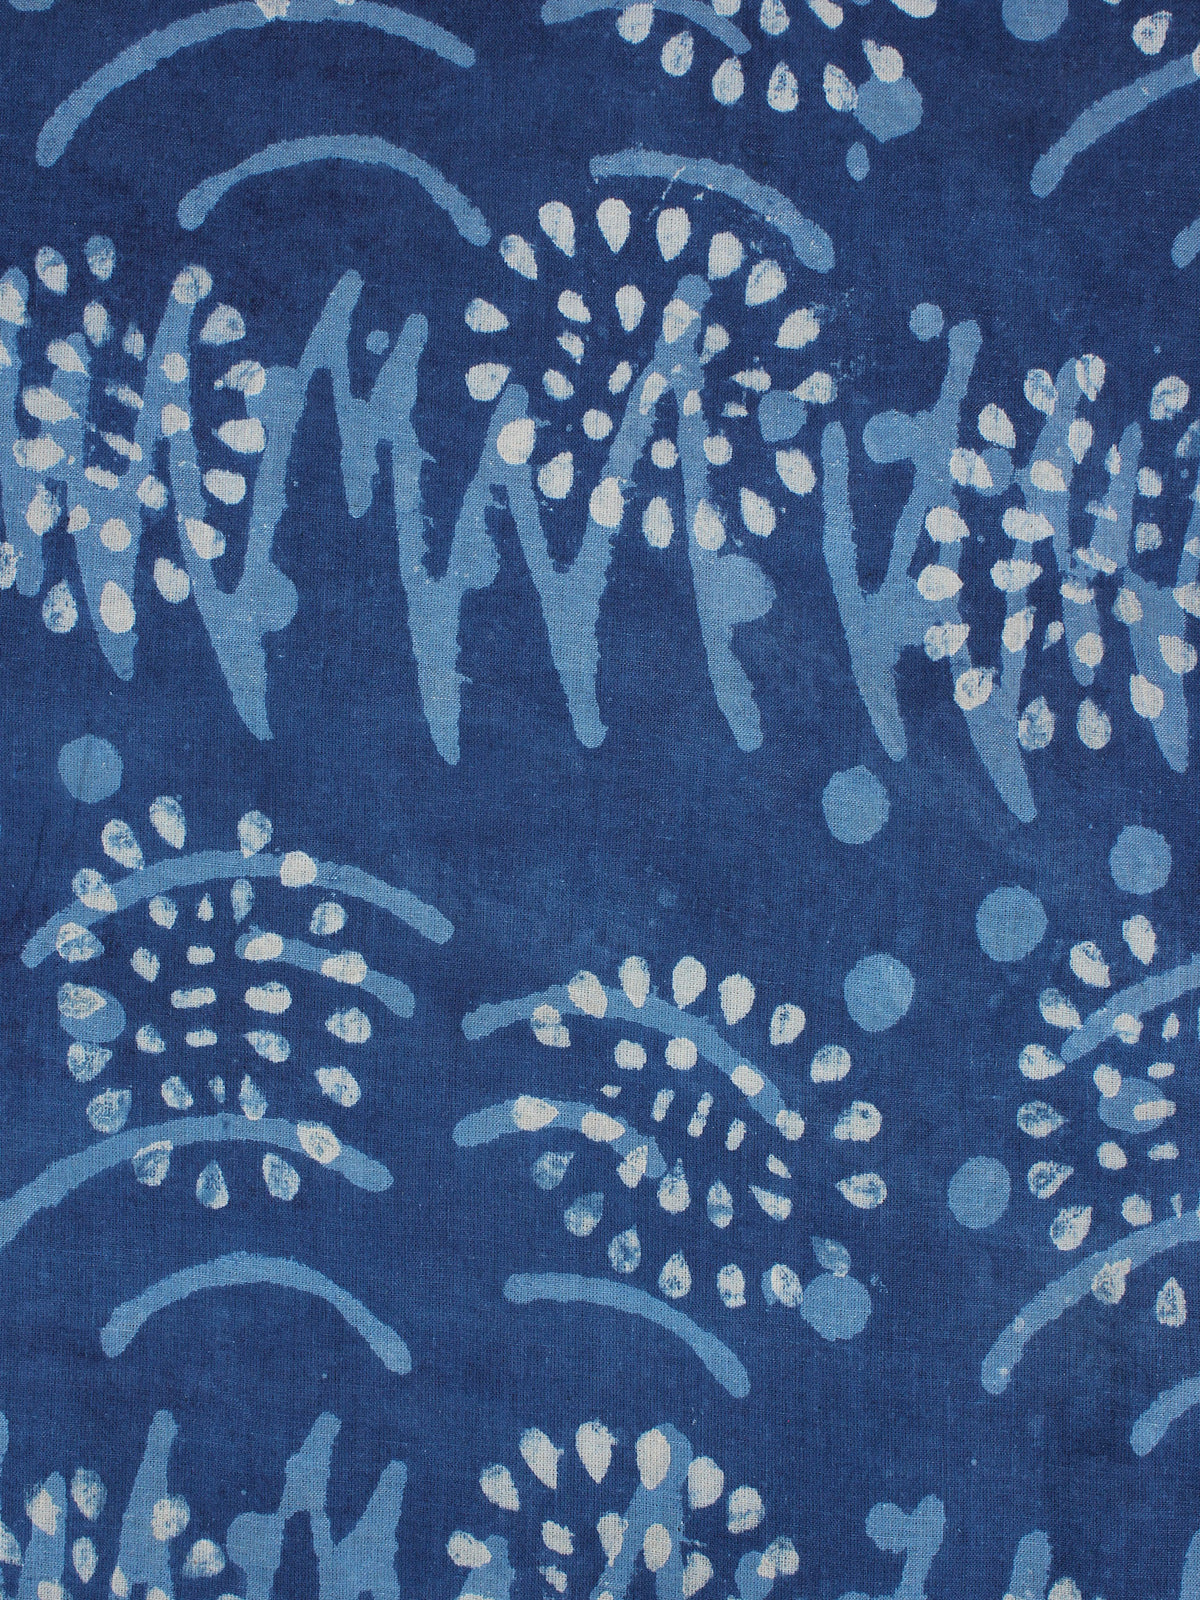 Indigo Blue White Hand Block Printed Cotton Fabric Per Meter - F0916355